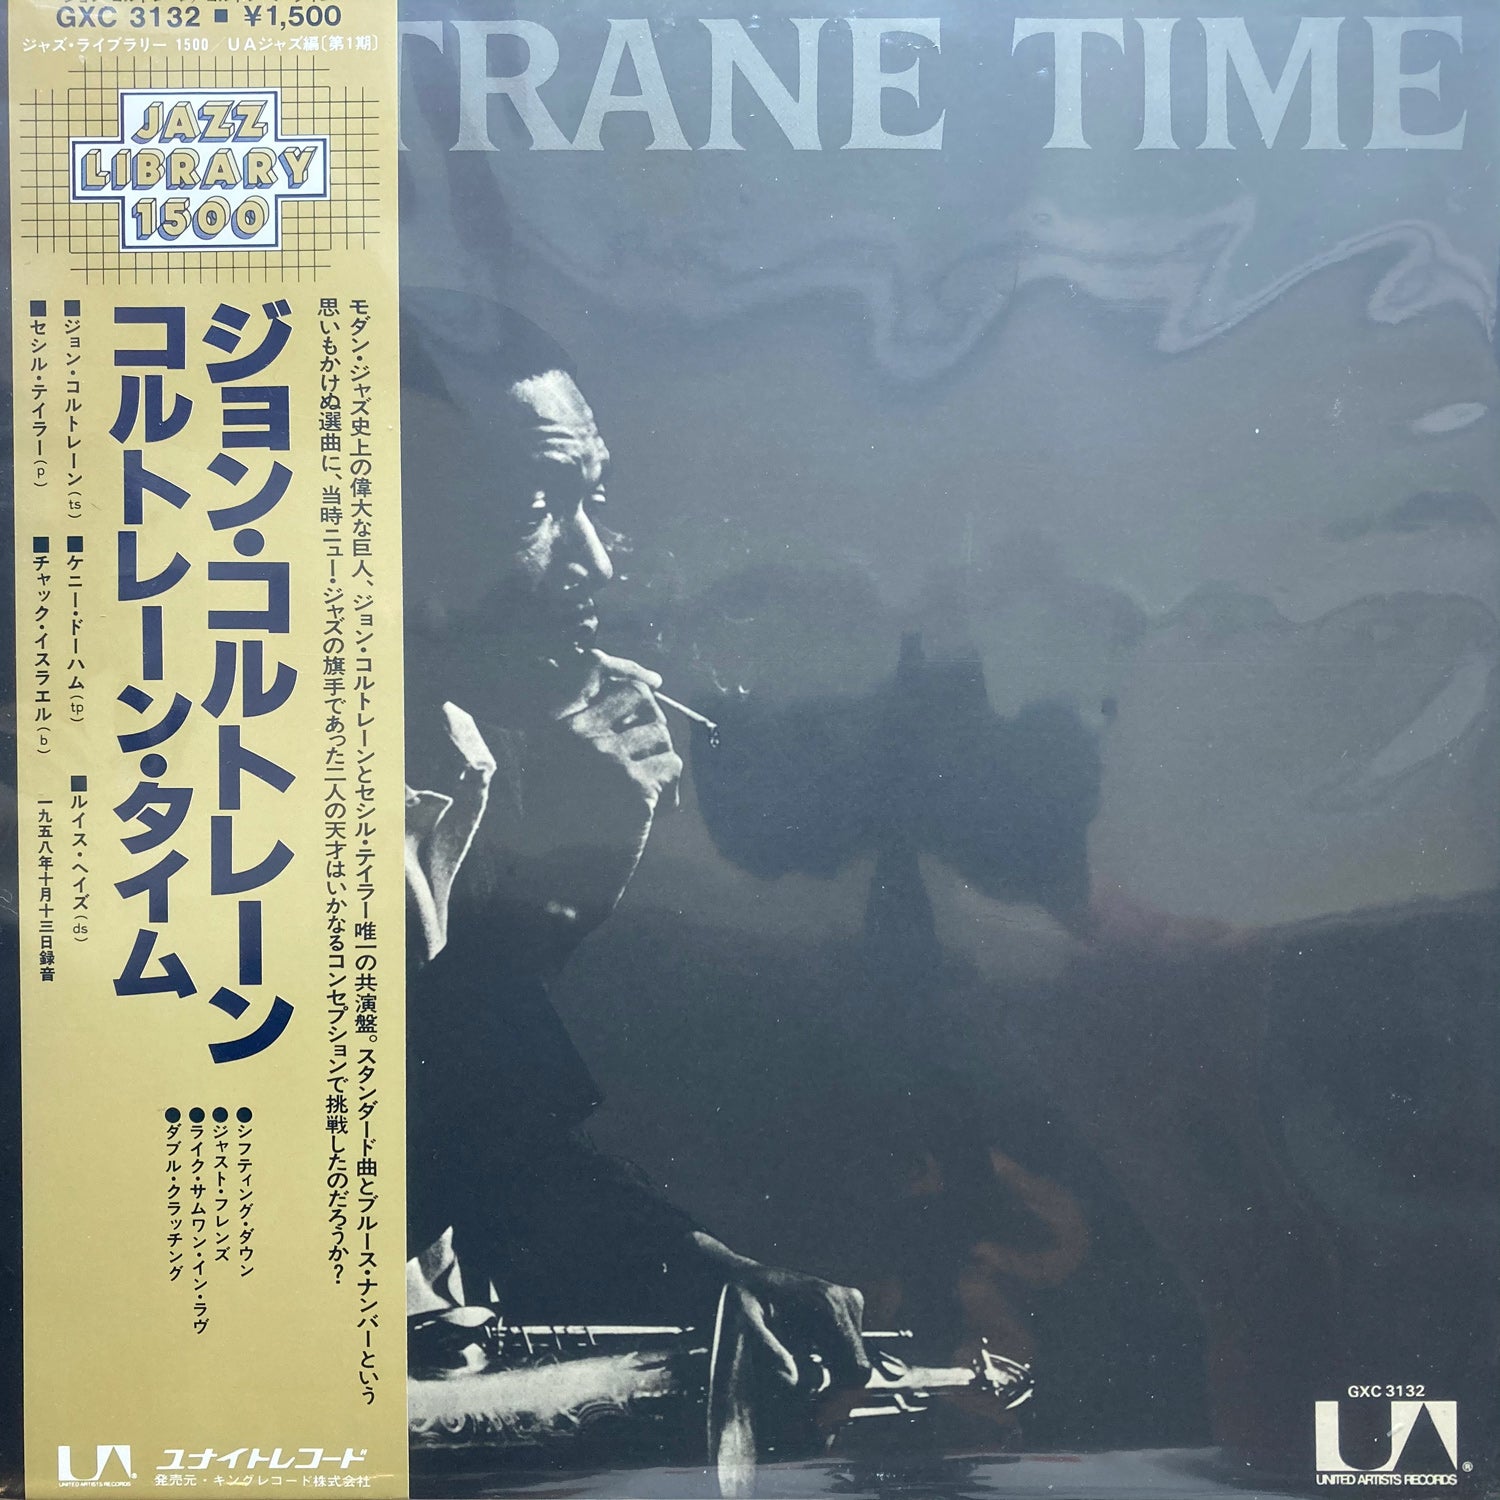 Coltrane - Coltrane Time